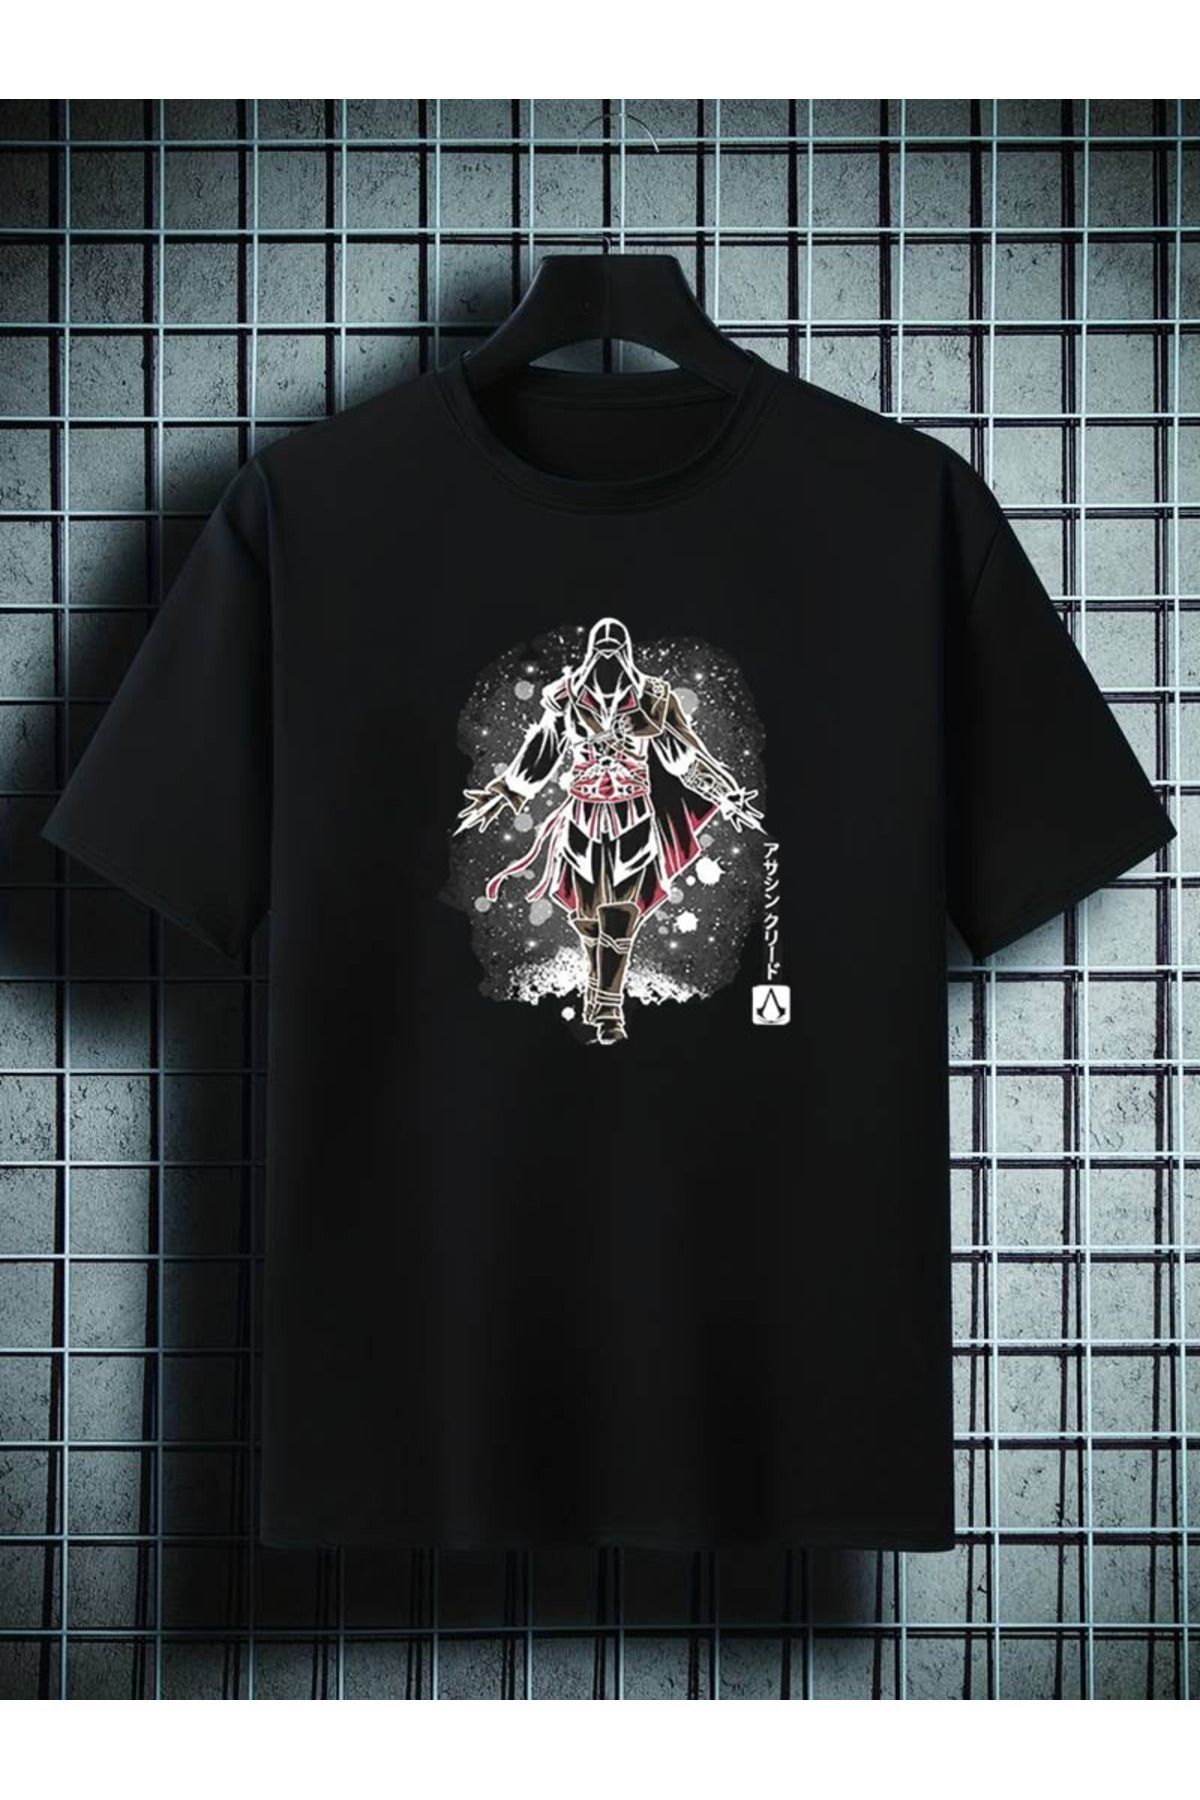 LEIVOR Ezio Assassin's Creed Baskılı Unisex Pamuk T-shirt